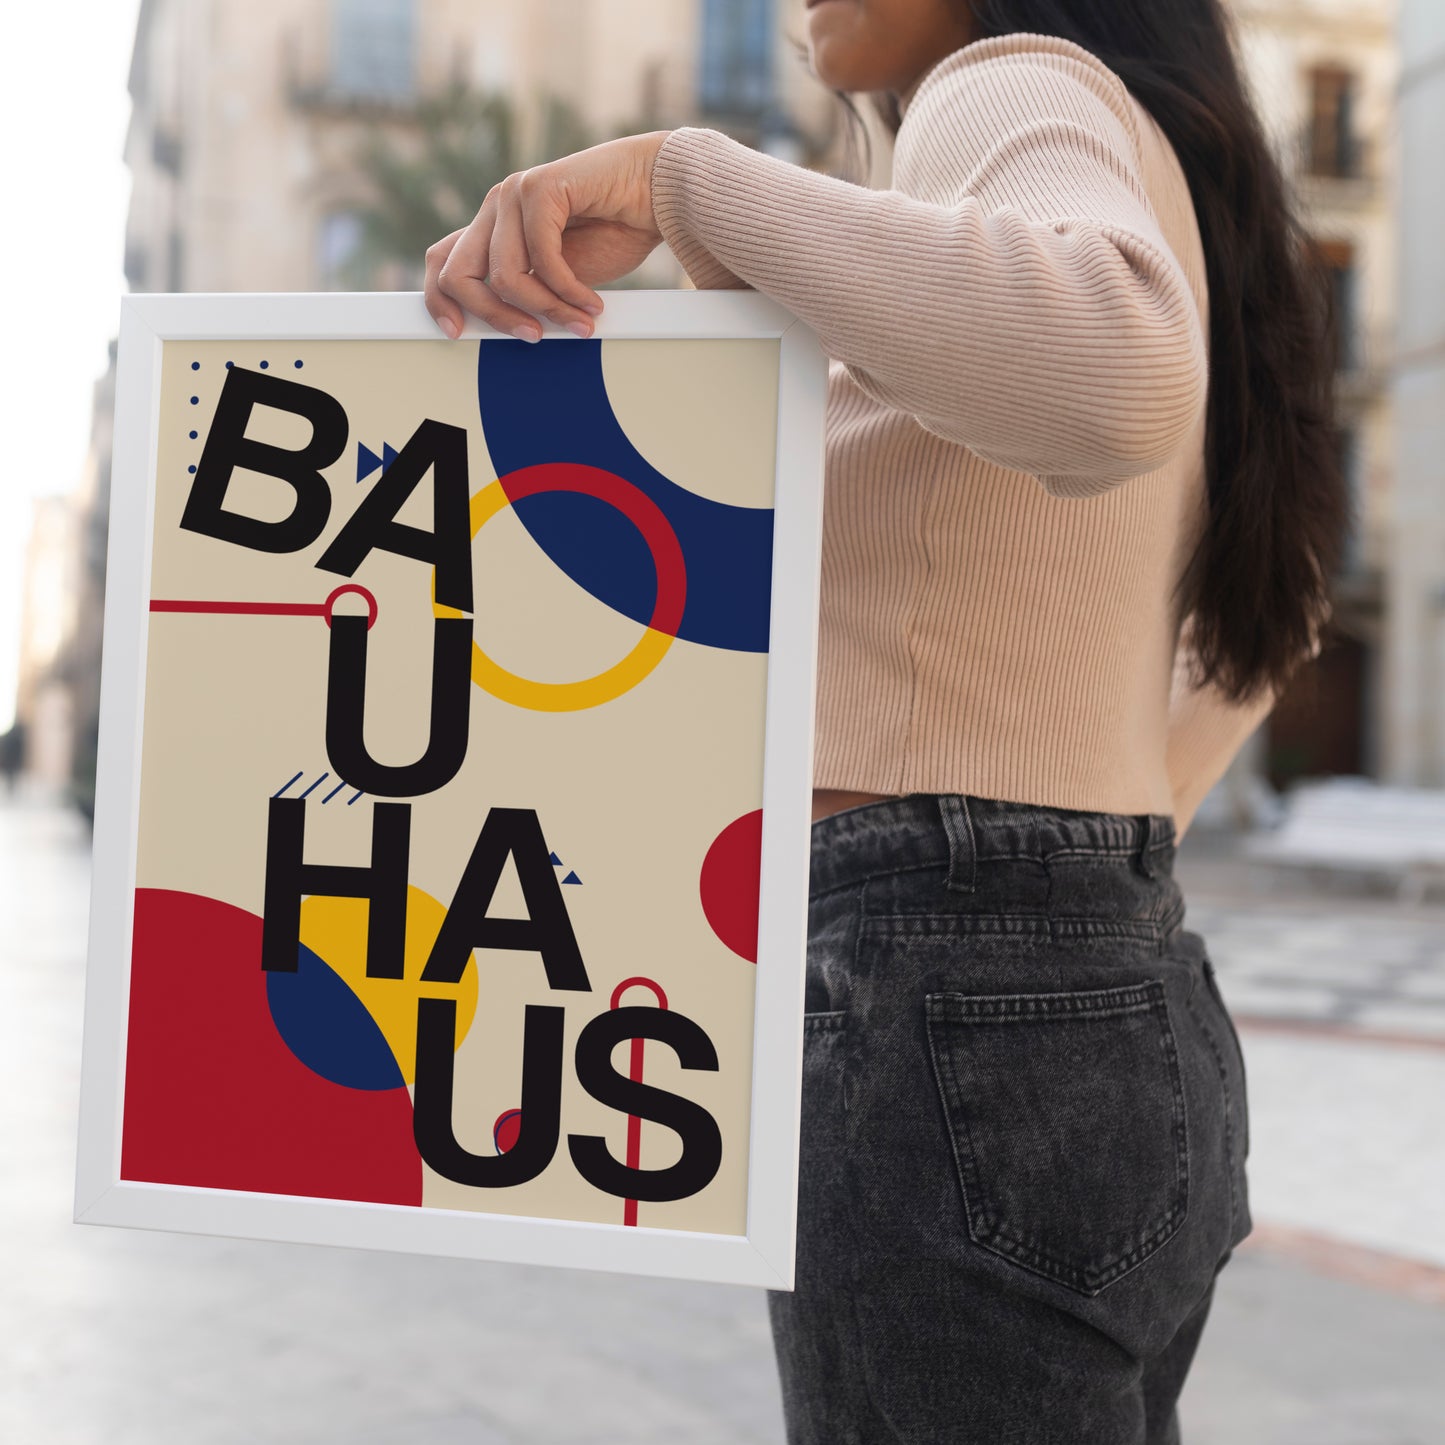 Typographic Bauhaus Poster